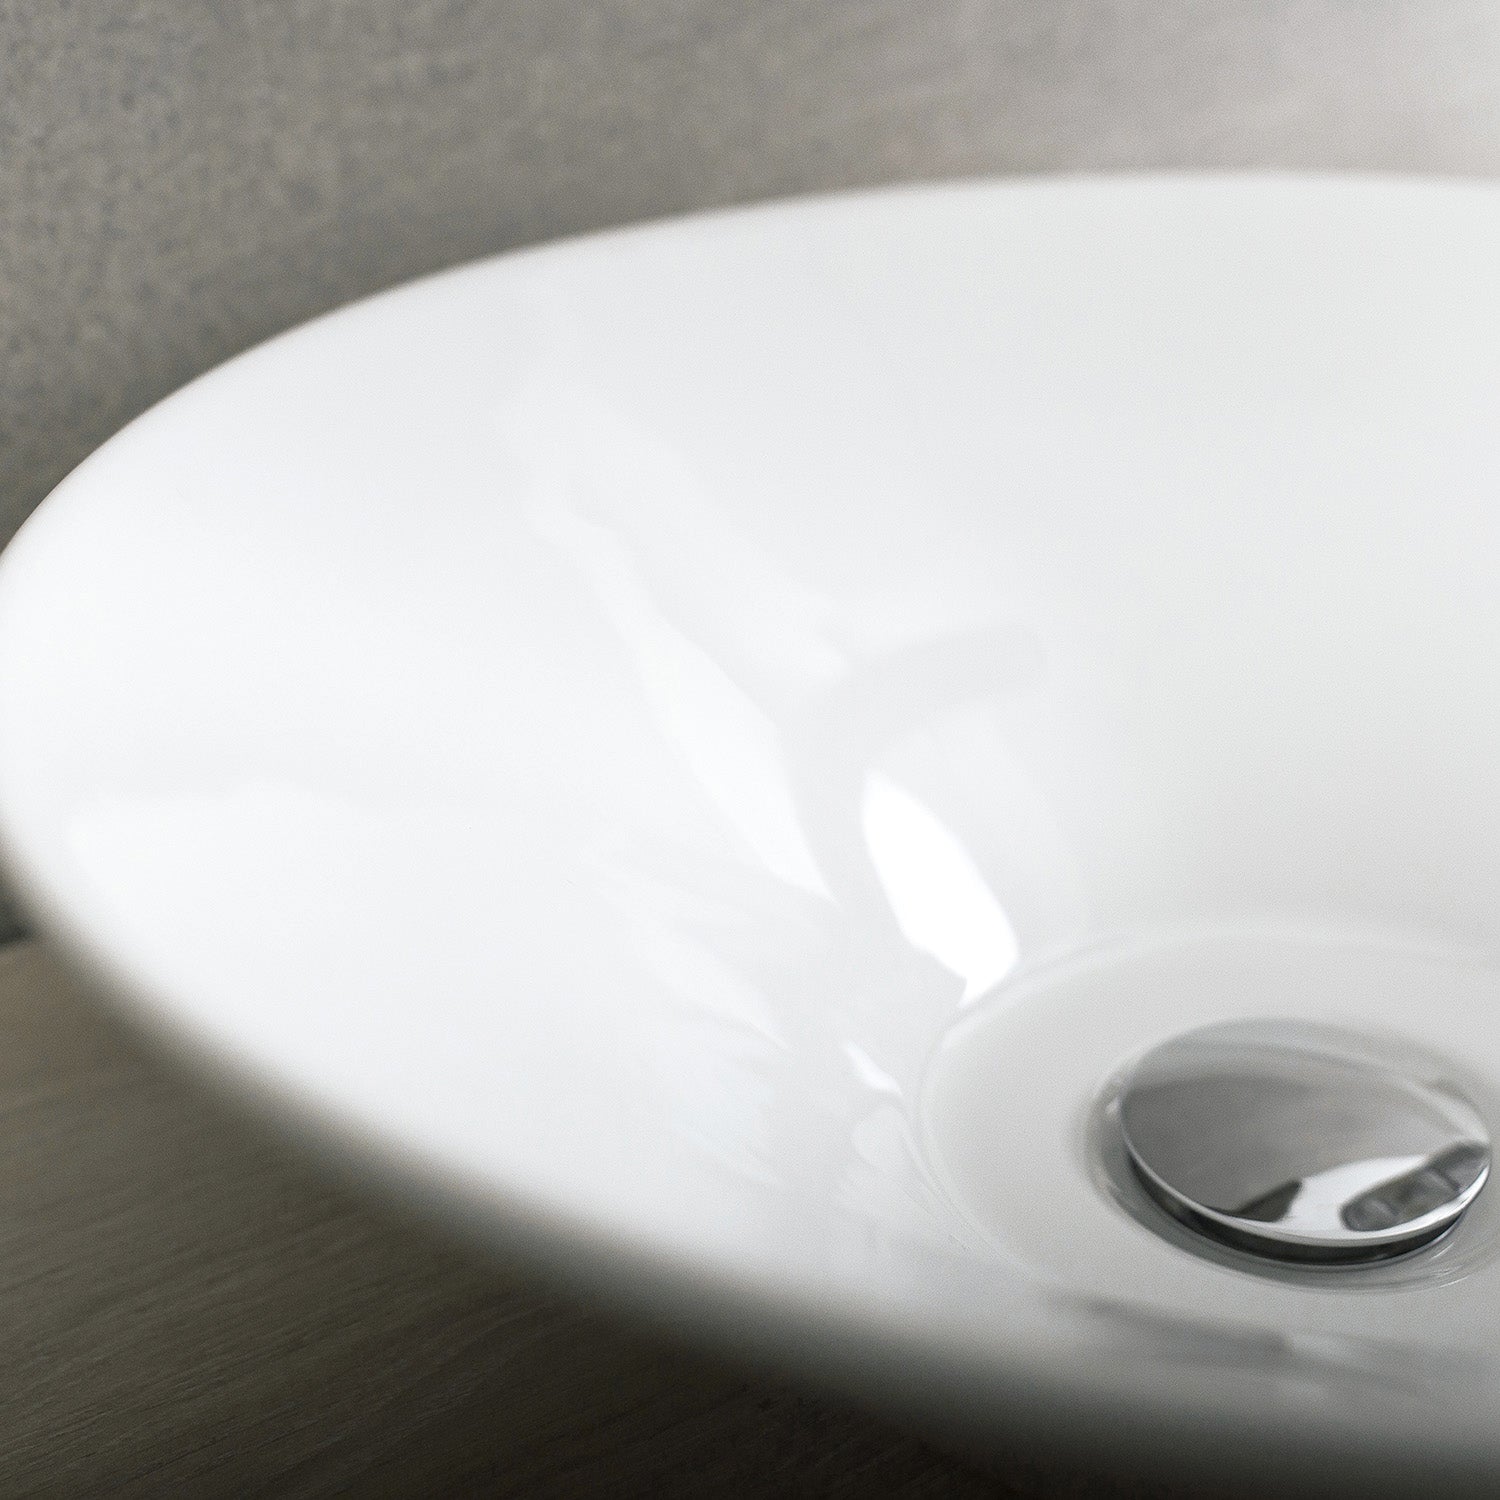 DAX Ceramic Round Single Bowl Bathroom Vessel Sink, White Finish, ?ò 17 x 5-1/2 Inches (BSN-234)